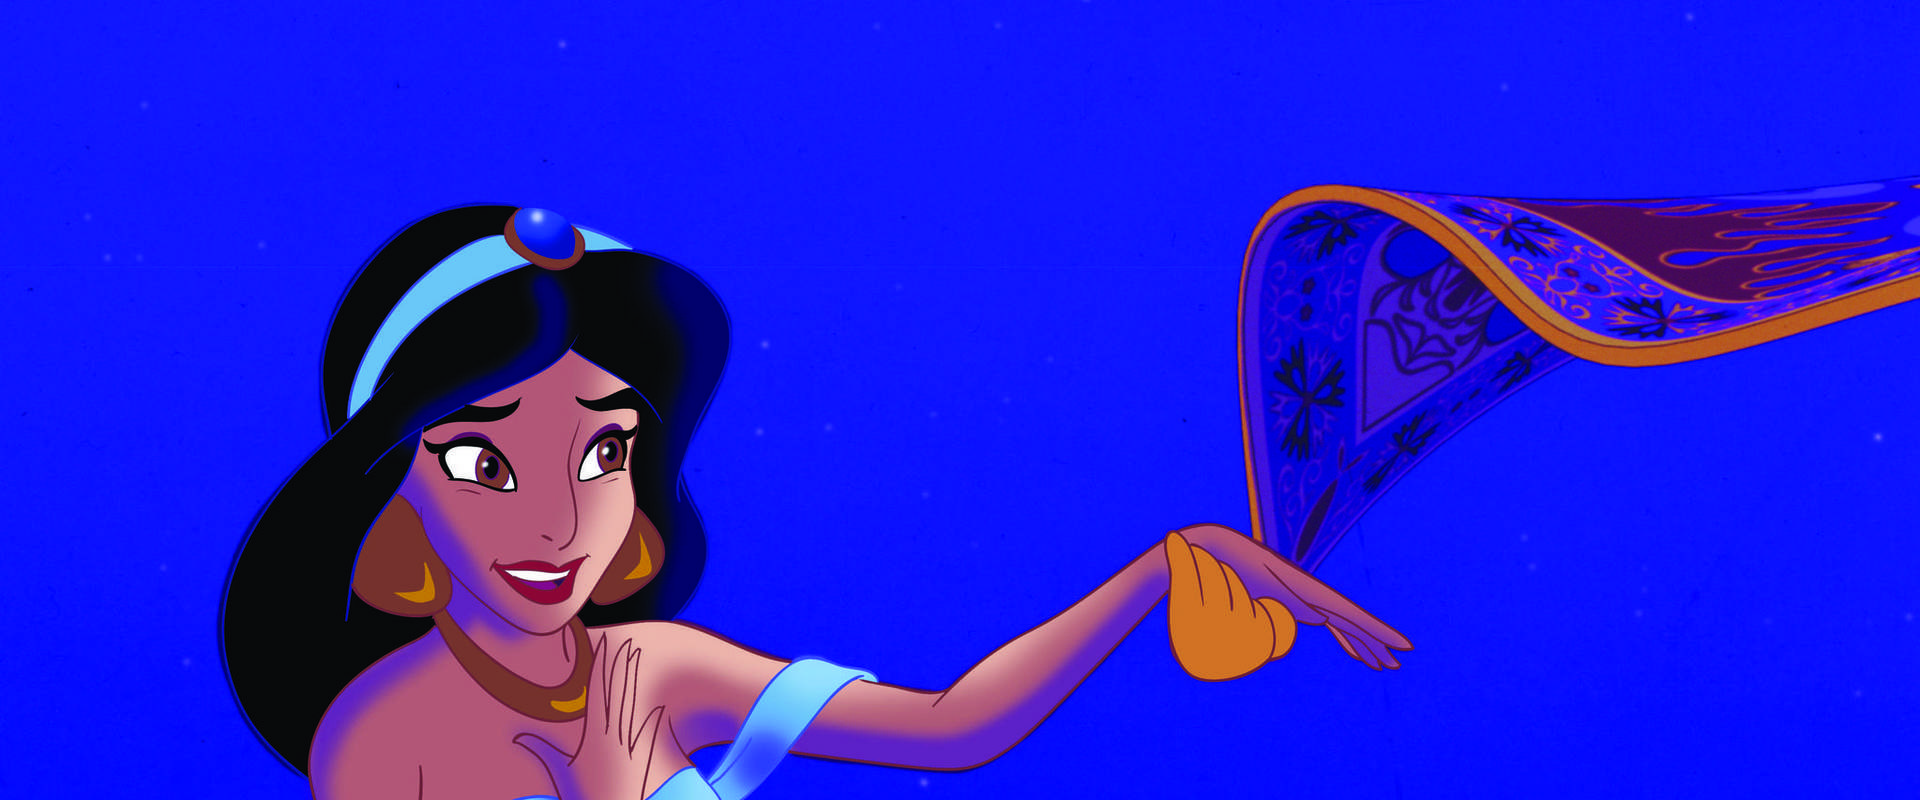 Aladdin background 1